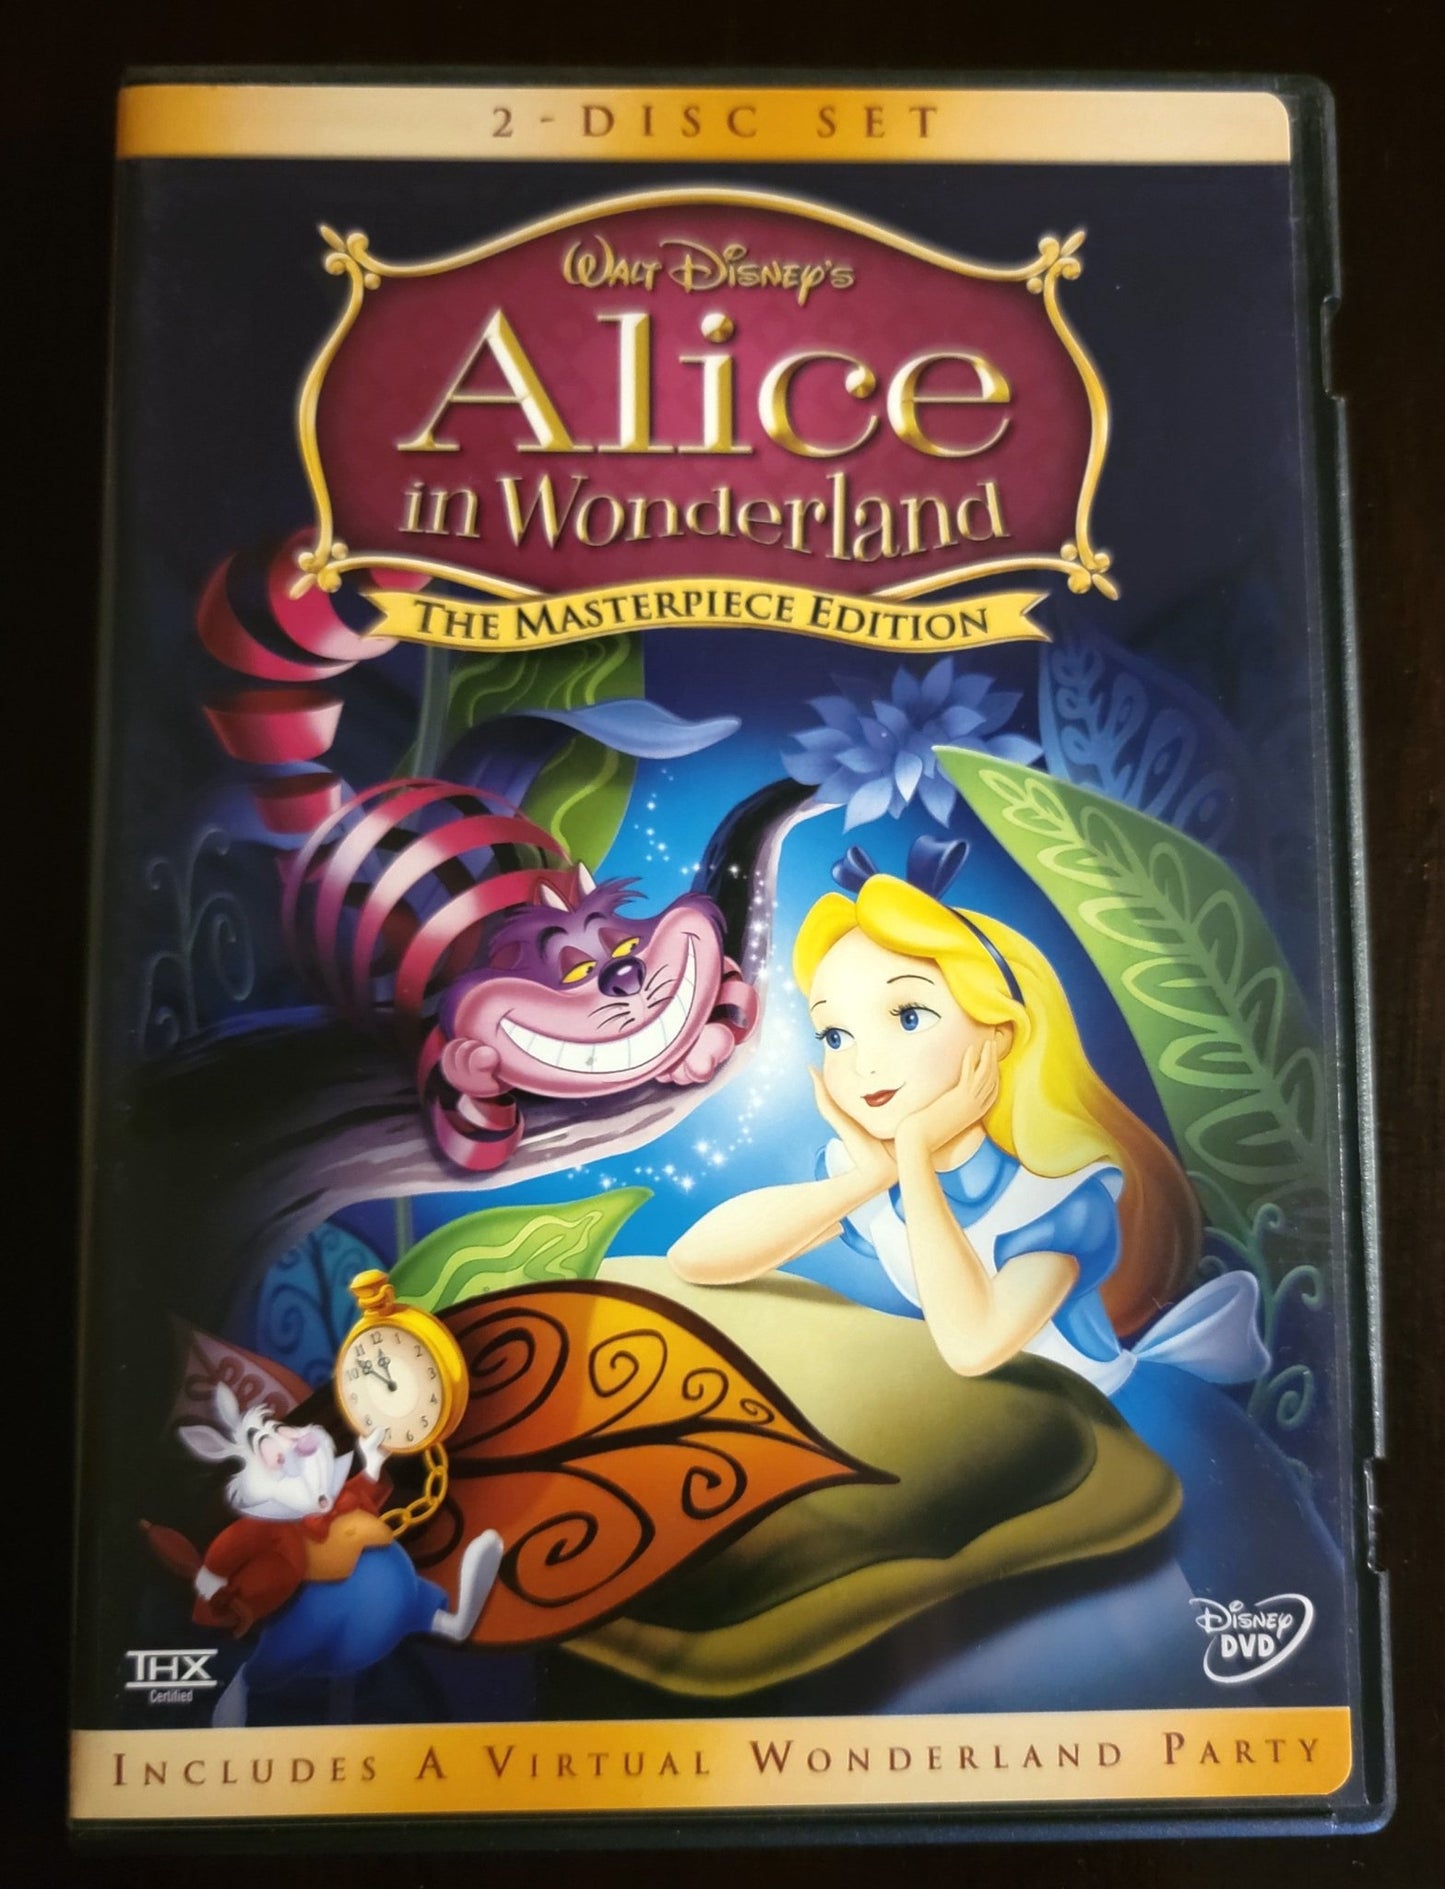 WALT DISNEY PICTURES - Alice in Wonderland | DVD | Masterpiece Edition 2 Disc Set Includes A Virtual Wonderland Party - DVD - Steady Bunny Shop